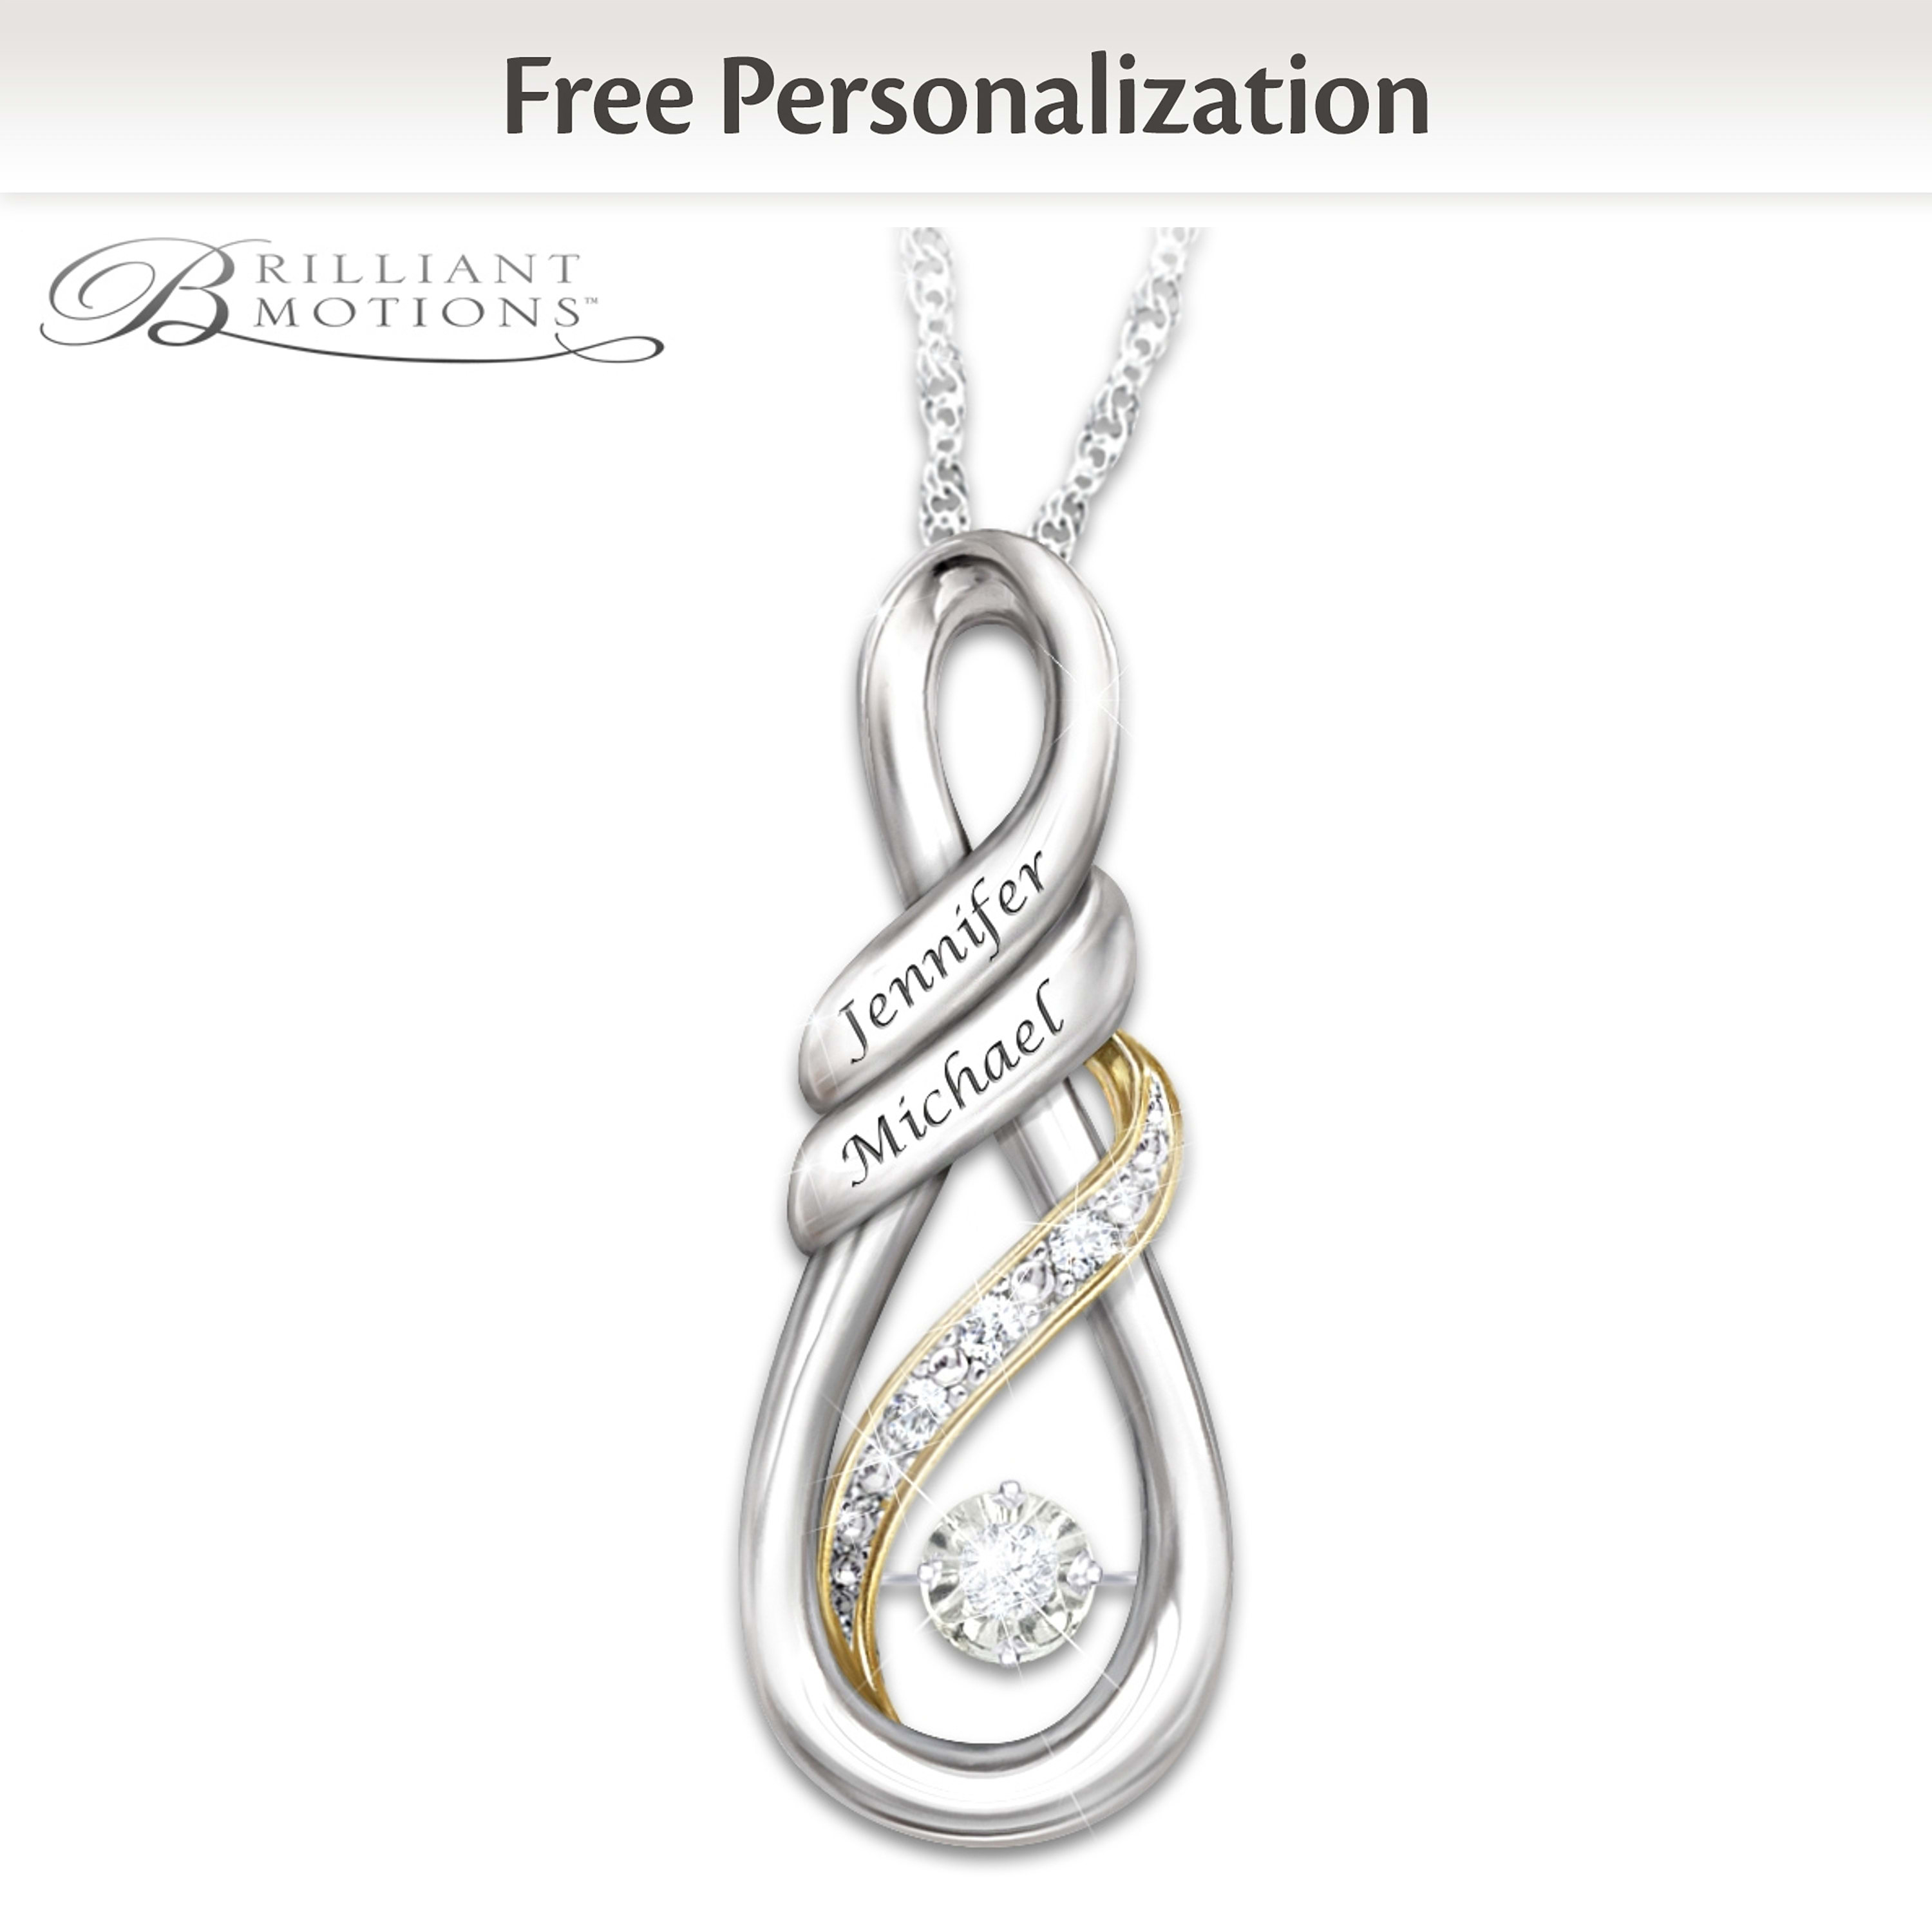 I Love You Brilliant Motions Personalized Diamond Pendant Necklace